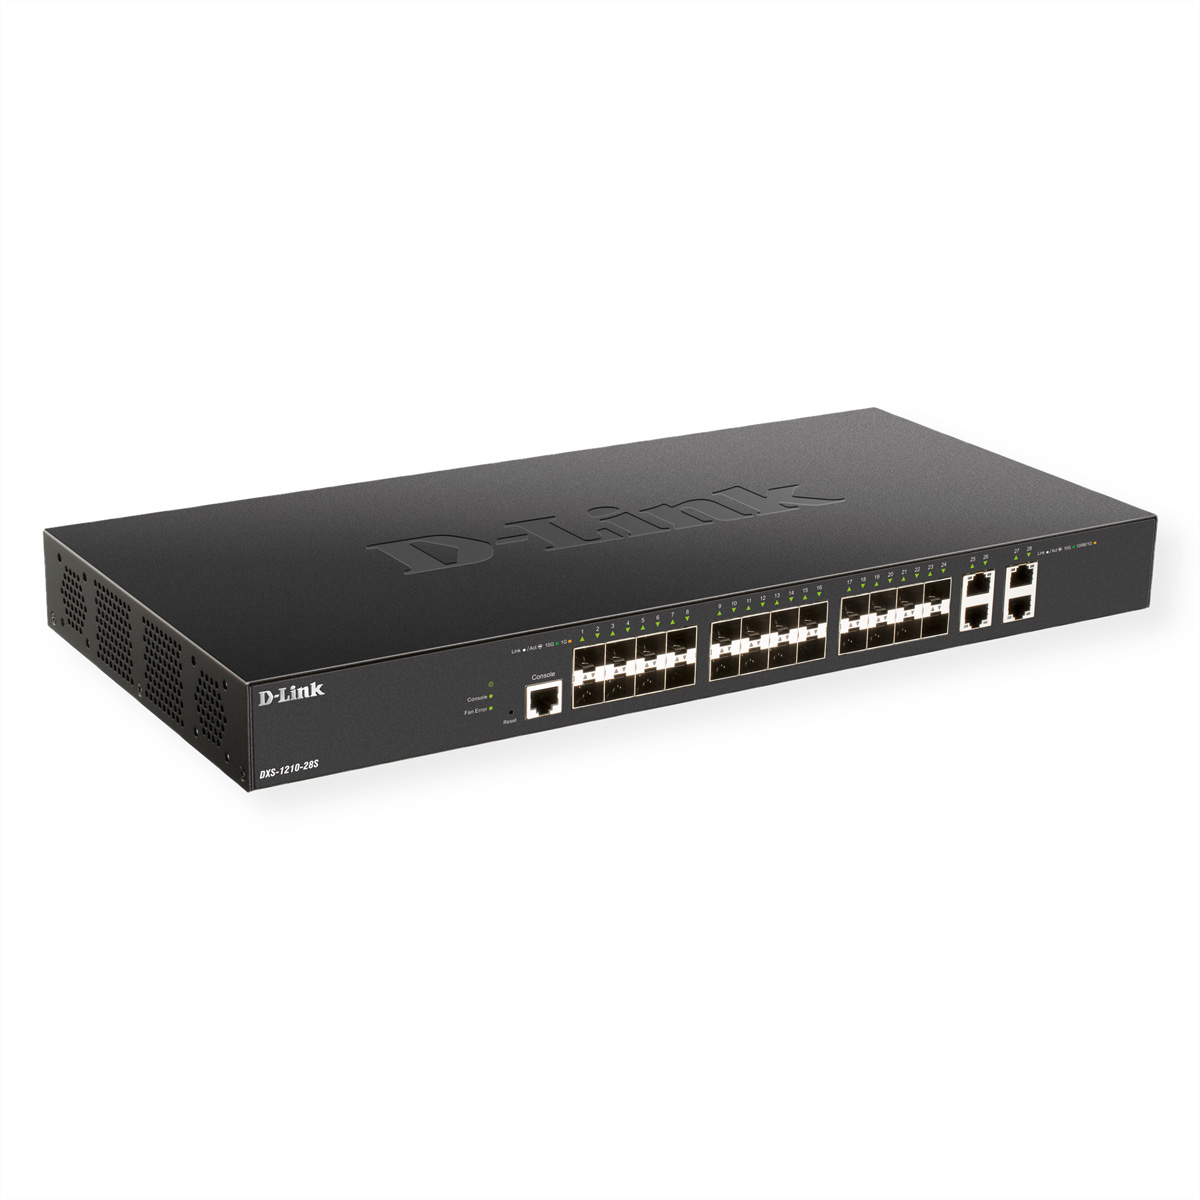 D-LINK DXS-1210-28S 10G 24x 10G Switch x Managed Base-T Gigabit SFP+ Switch 4 Ethernet Ports + Smart